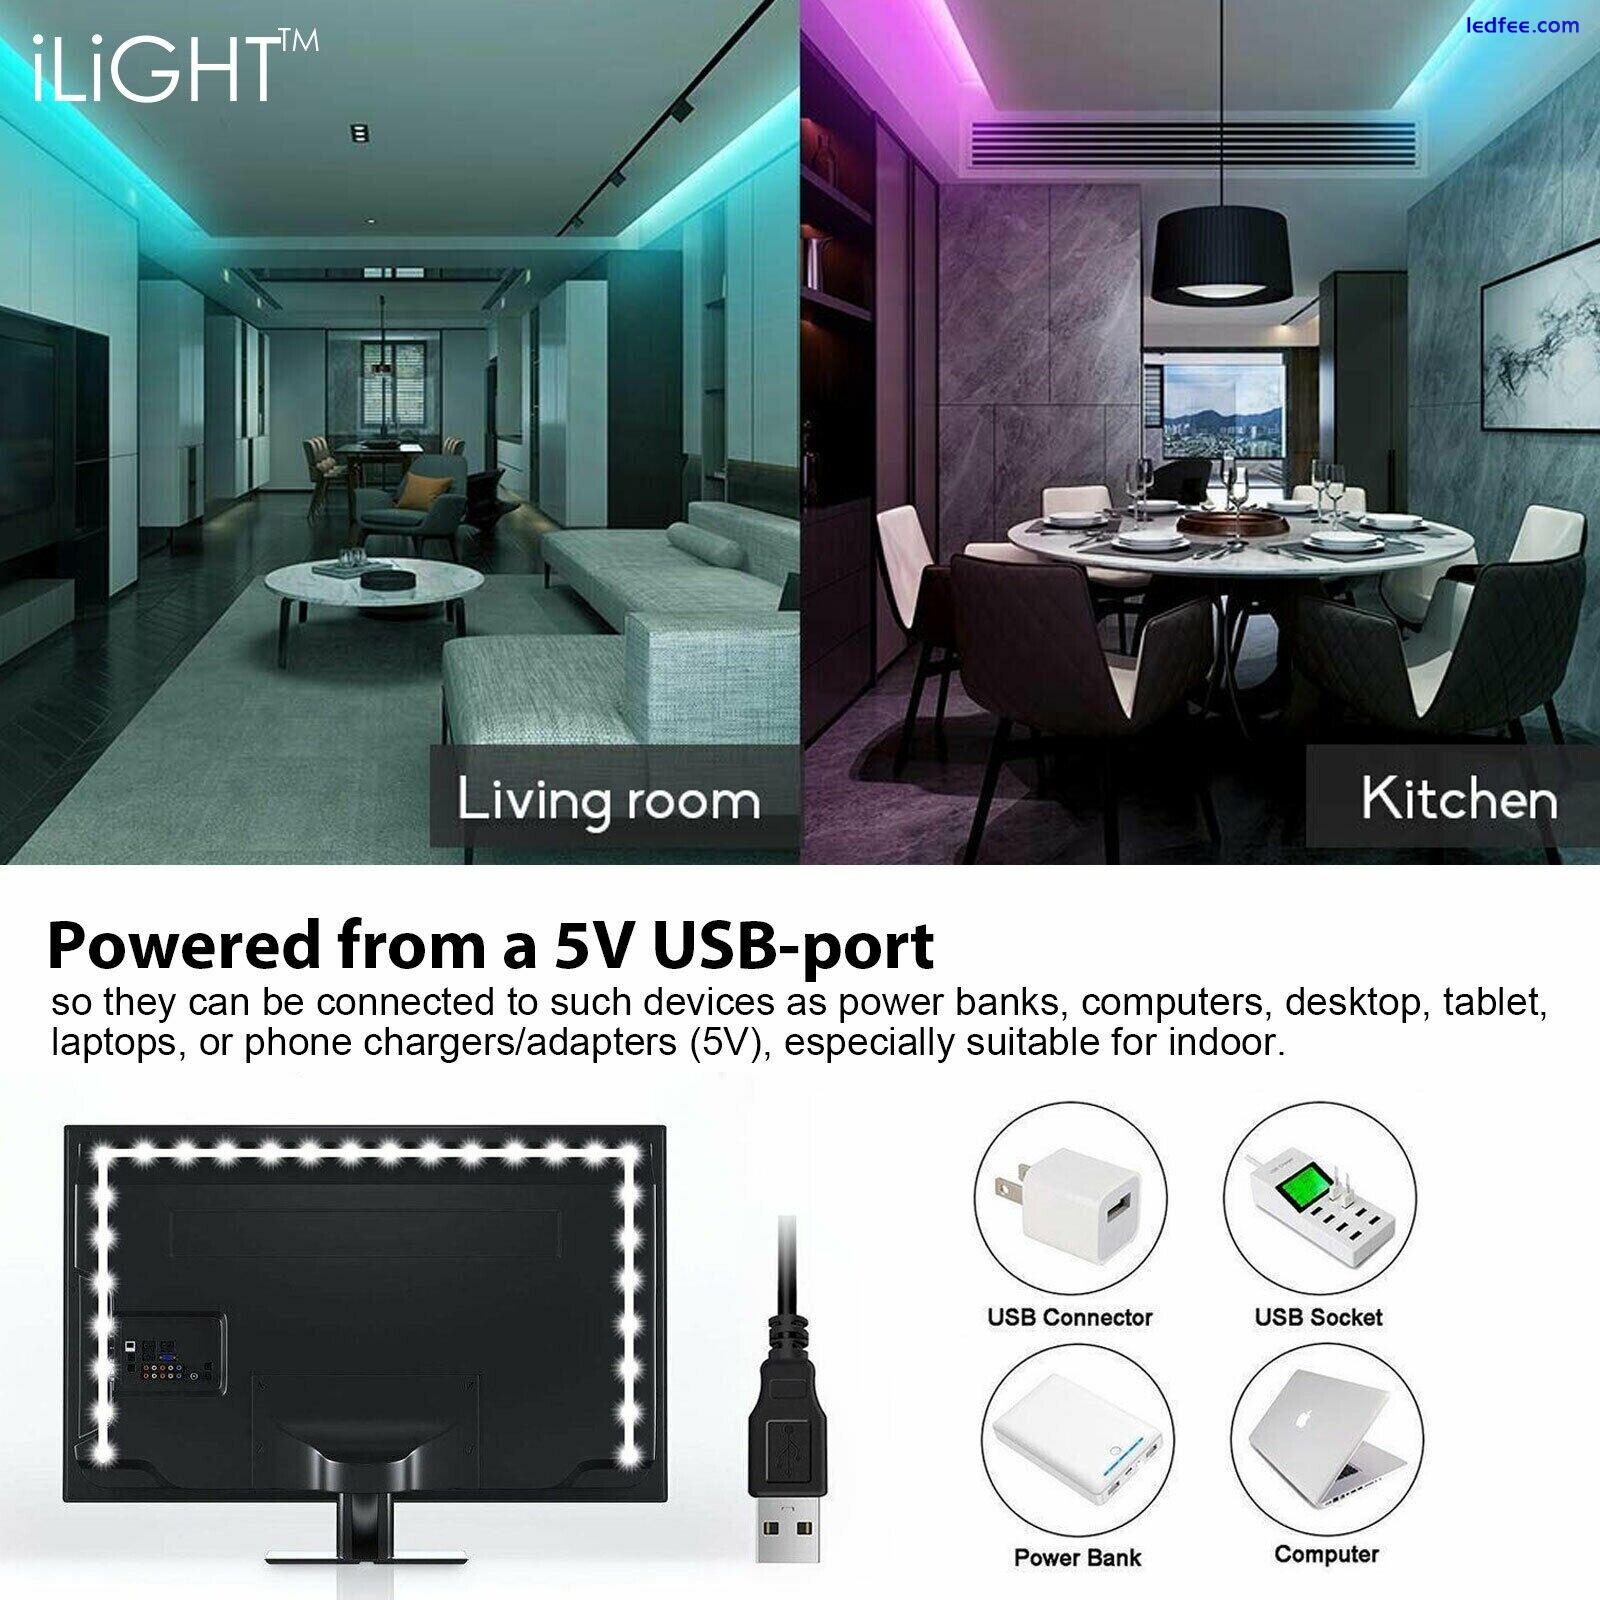 5M LED STRIP LIGHTS 5050 RGB COLOUR CHANGING TAPE TV UNDER CABINET KITCHEN 5 